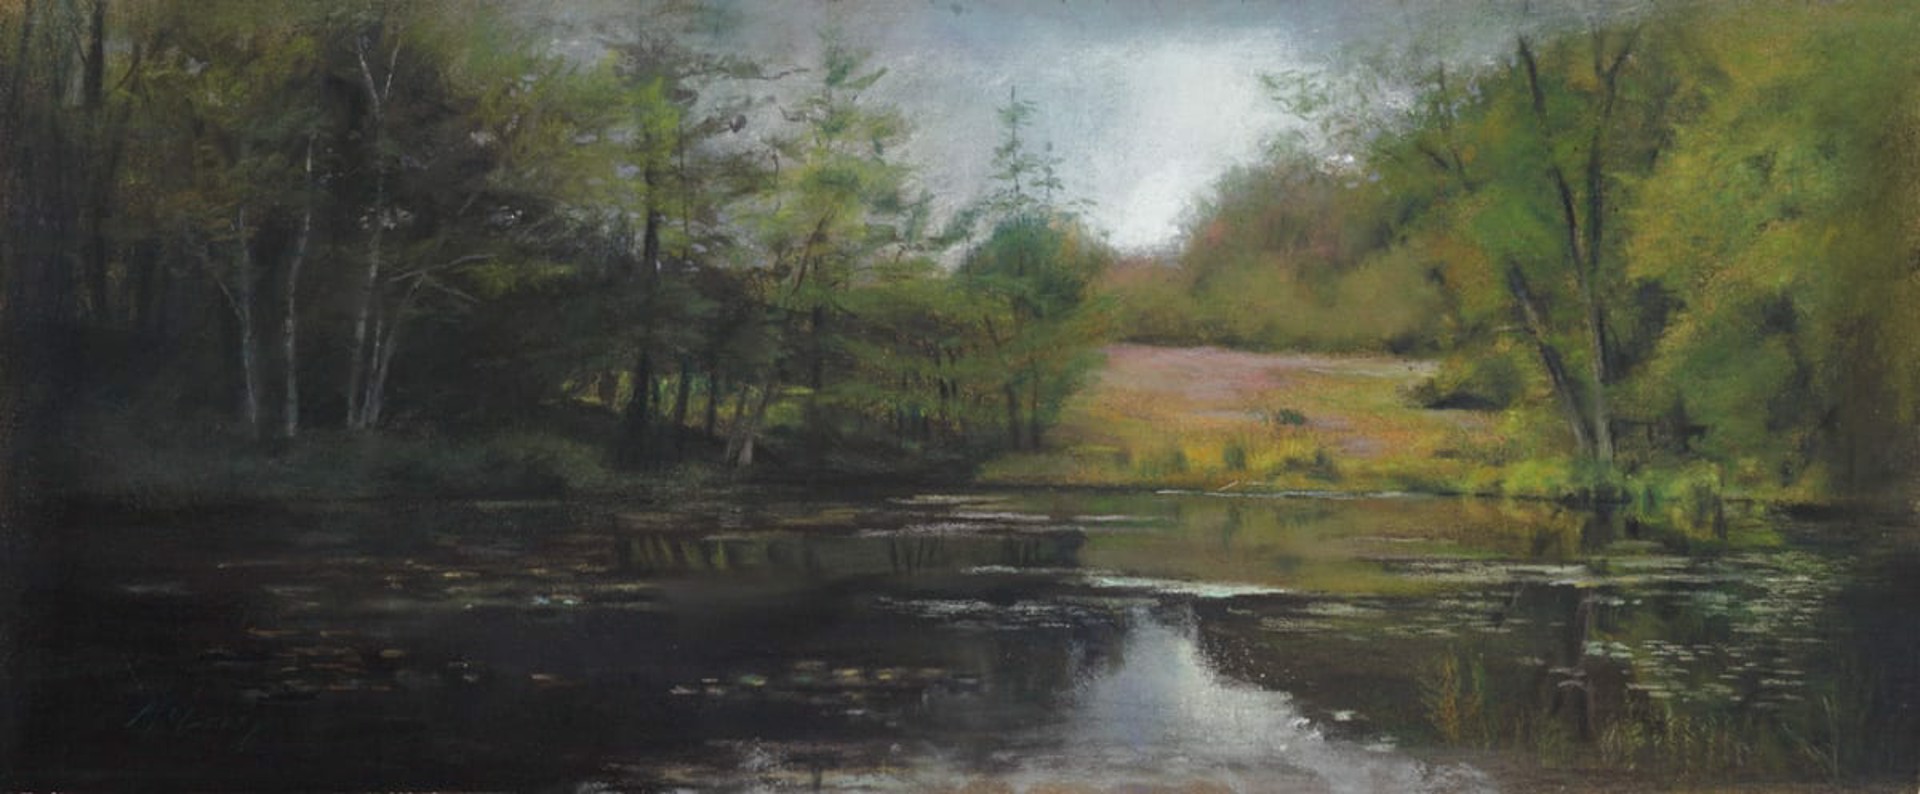 Hollis Pond by Anne McGrory